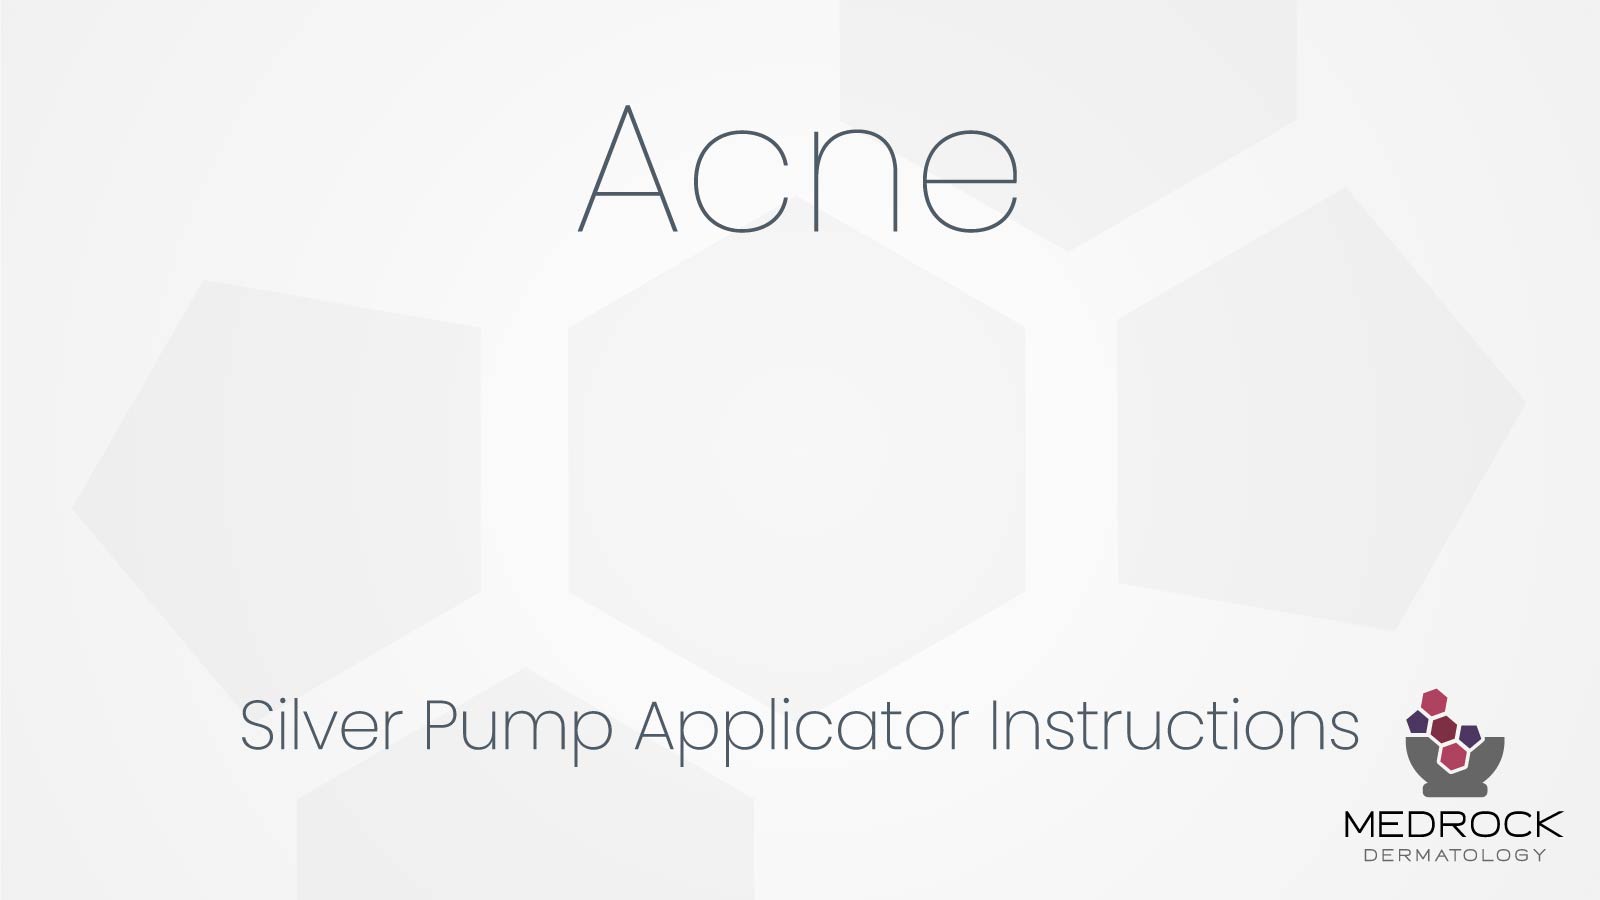 Acne Silver Pump Applicator Instructions